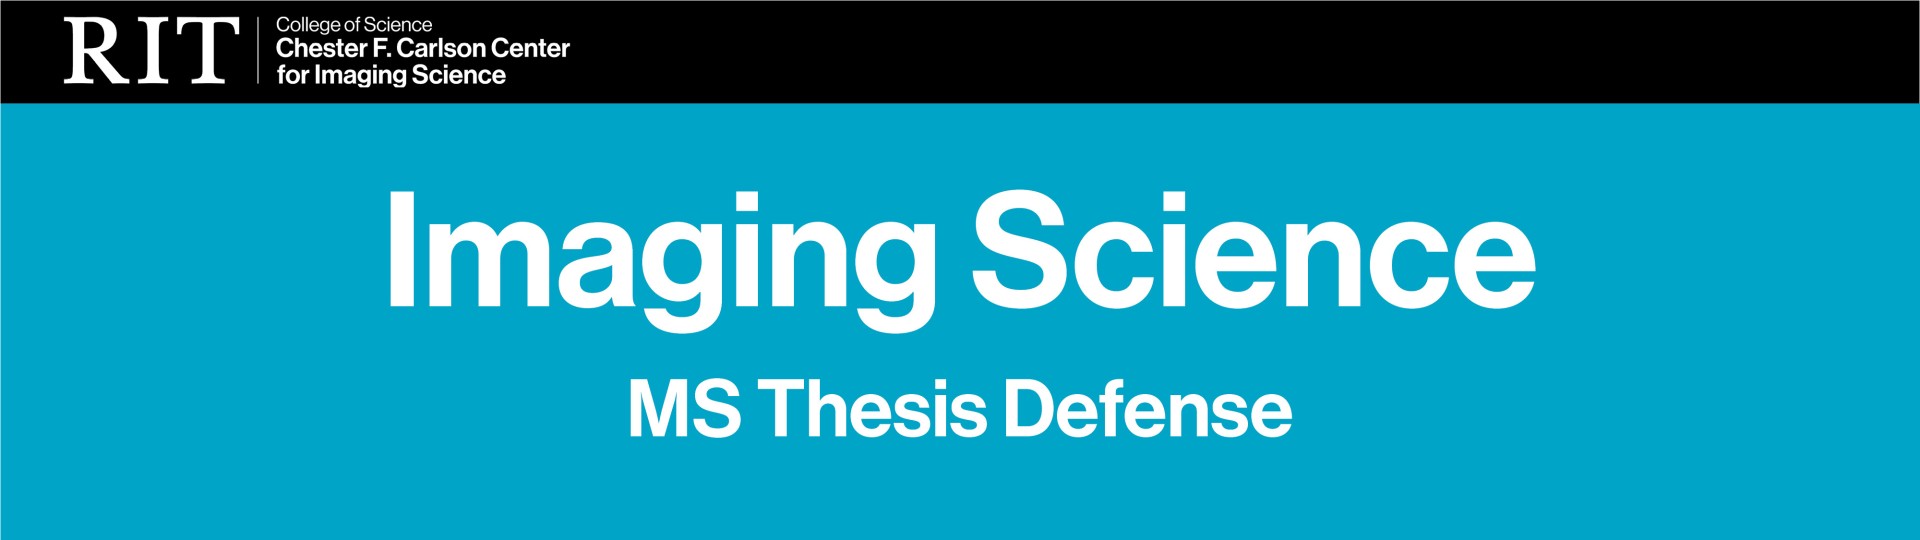 imaging science ms defense luke coffe